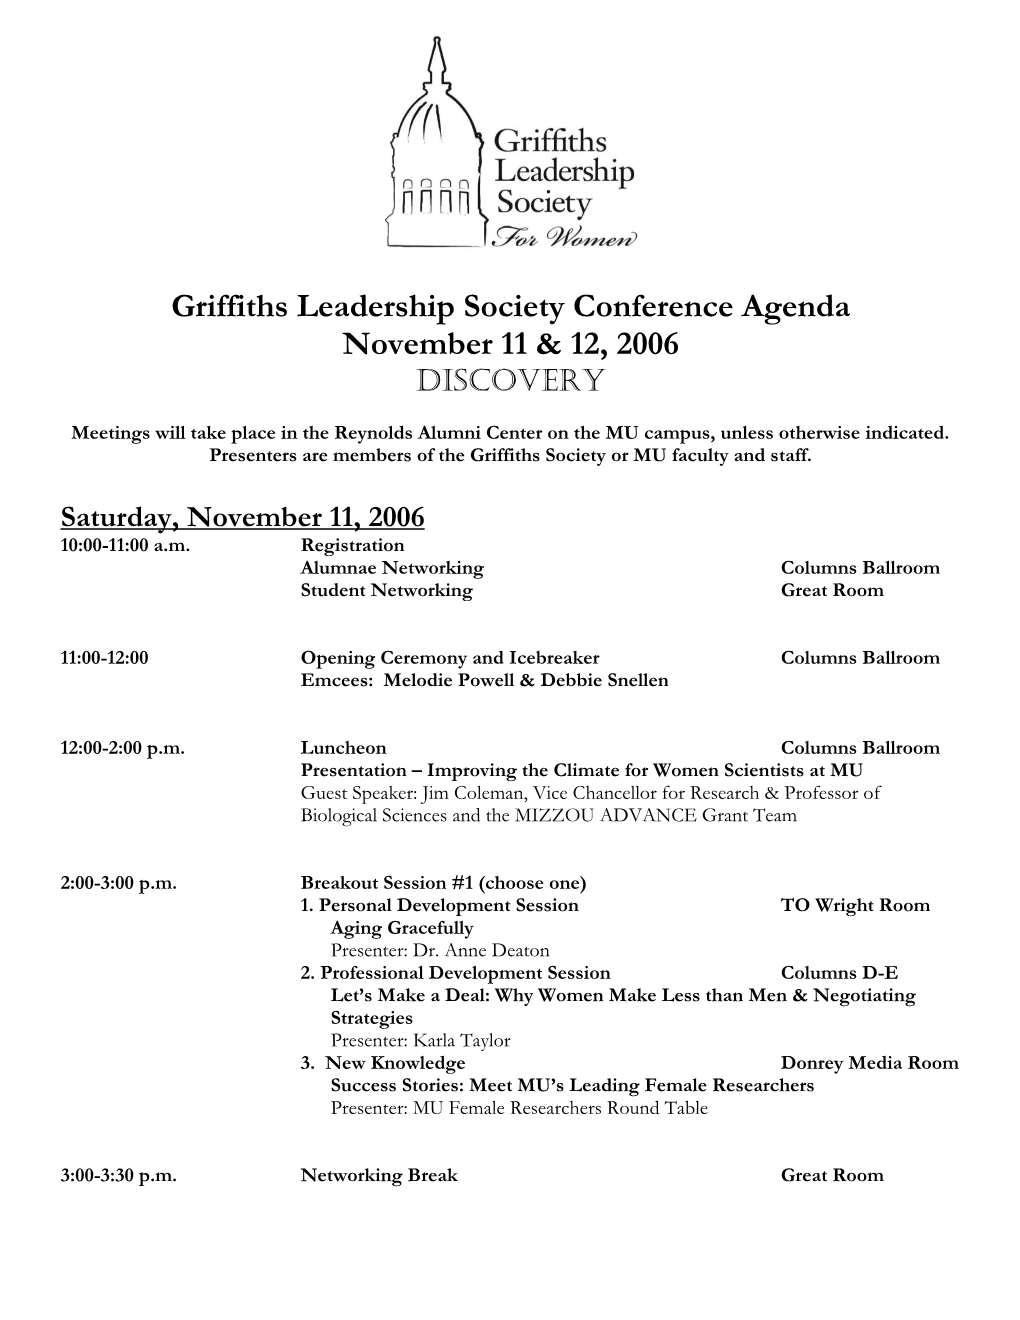 Griffiths Leadership Society Conference Agenda November 11 & 12, 2006